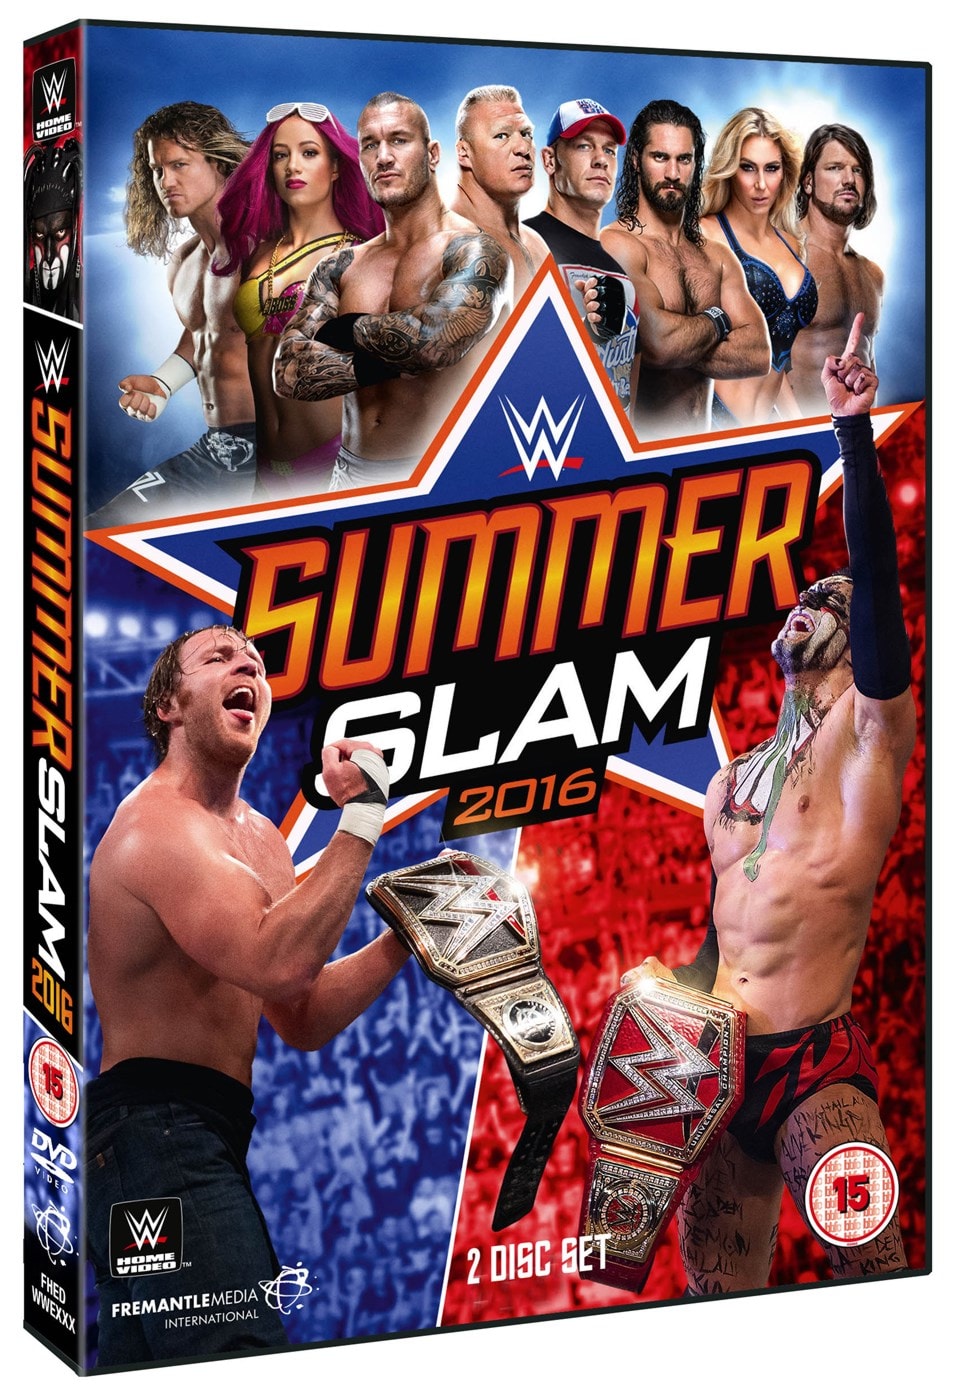 WWE Summerslam 2016 DVD Free shipping over £20 HMV Store